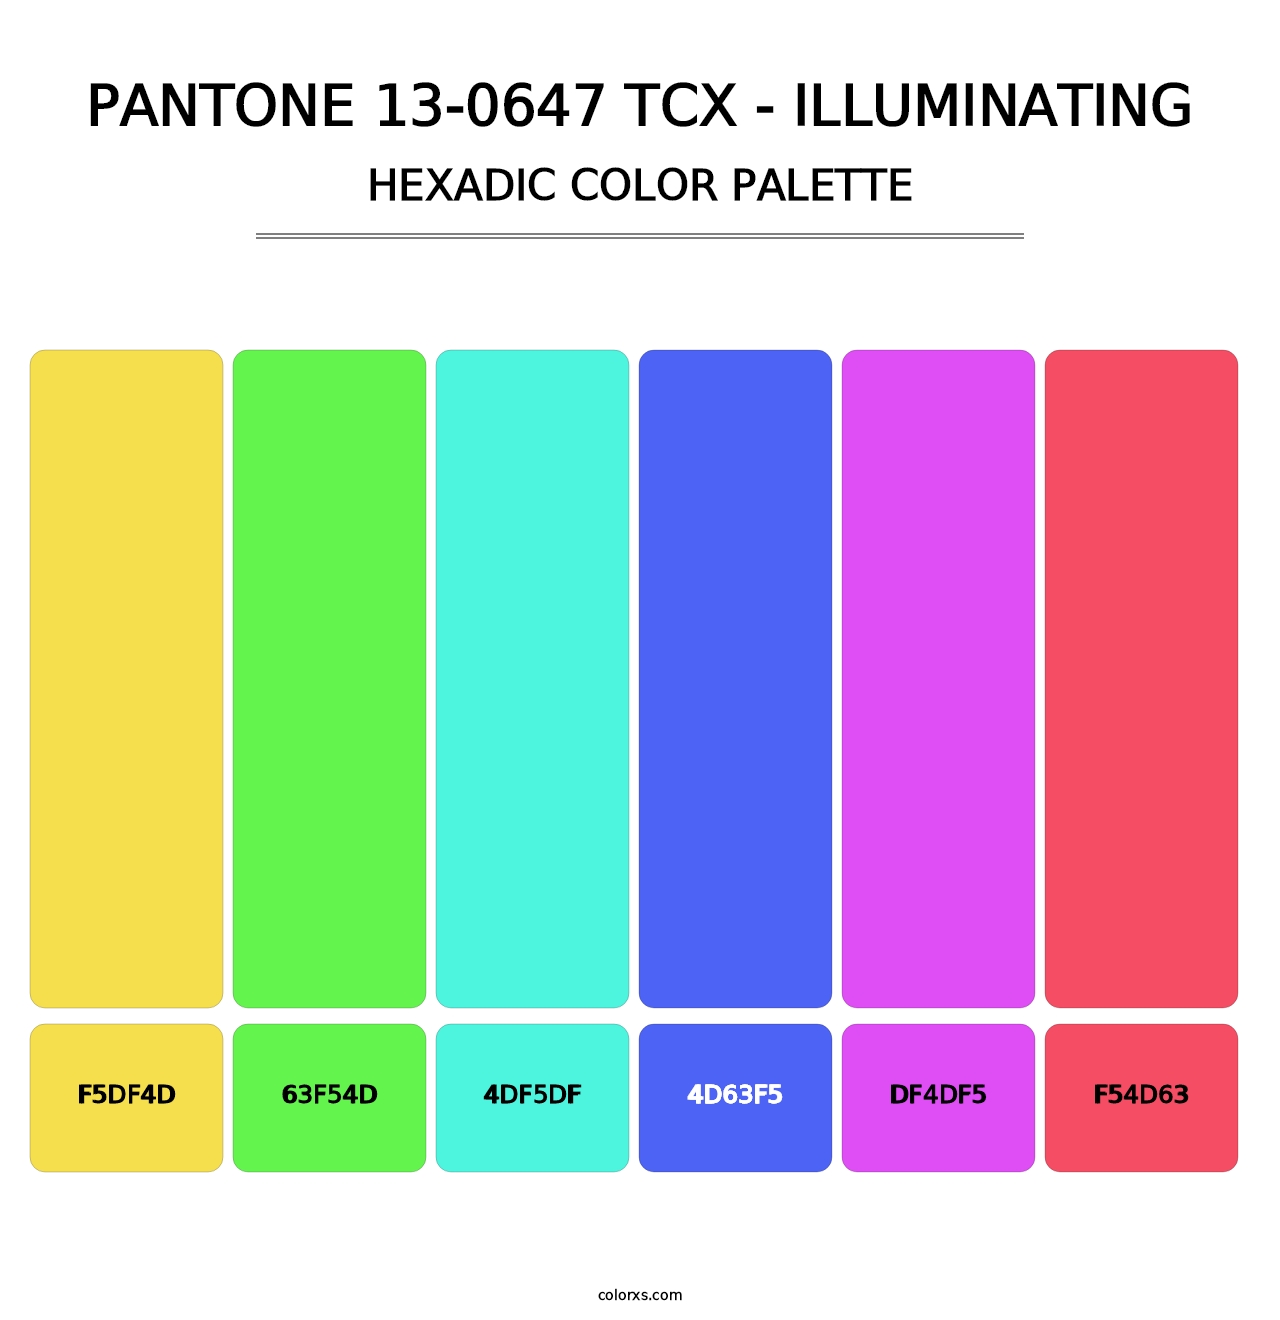 PANTONE 13-0647 TCX - Illuminating - Hexadic Color Palette